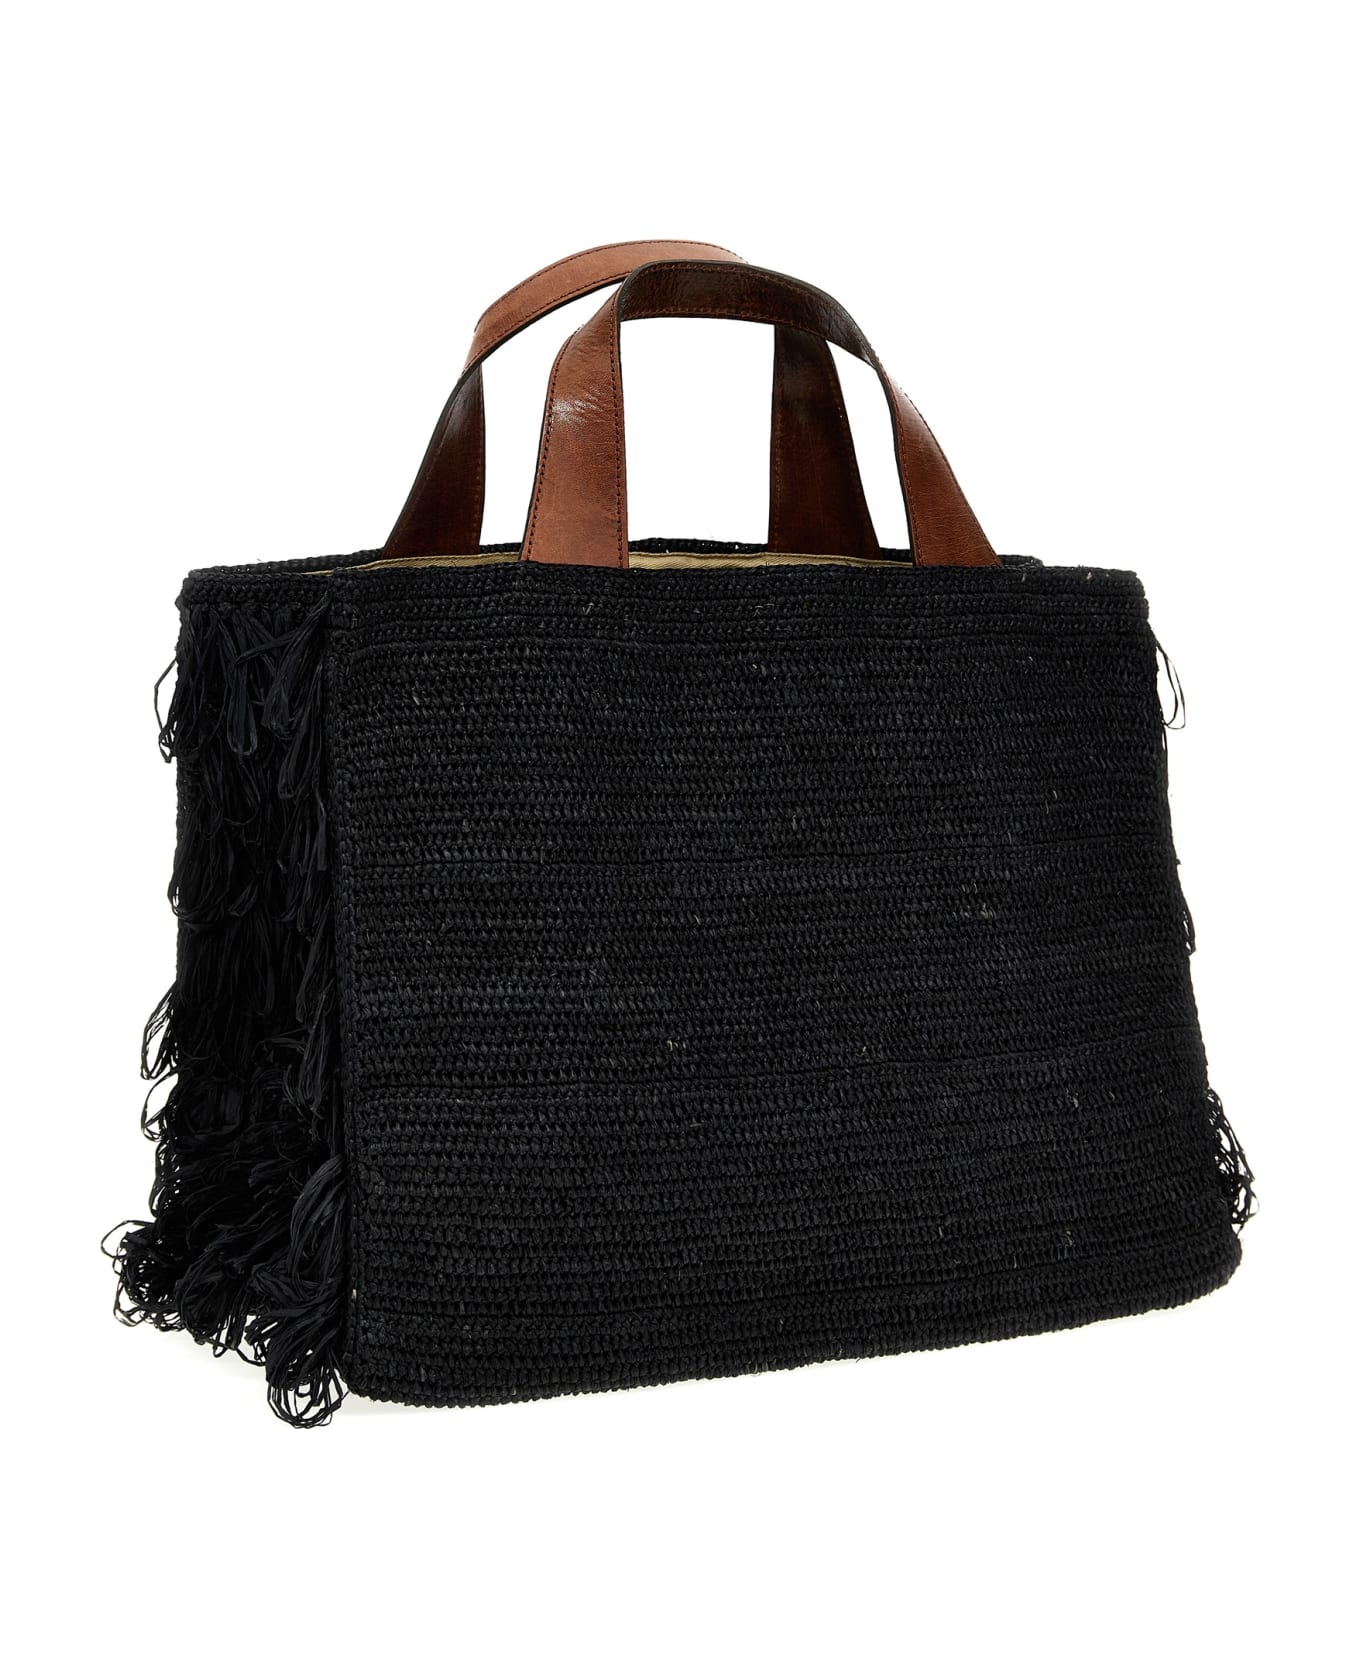 Ibeliv 'onja' Handbag - Black  